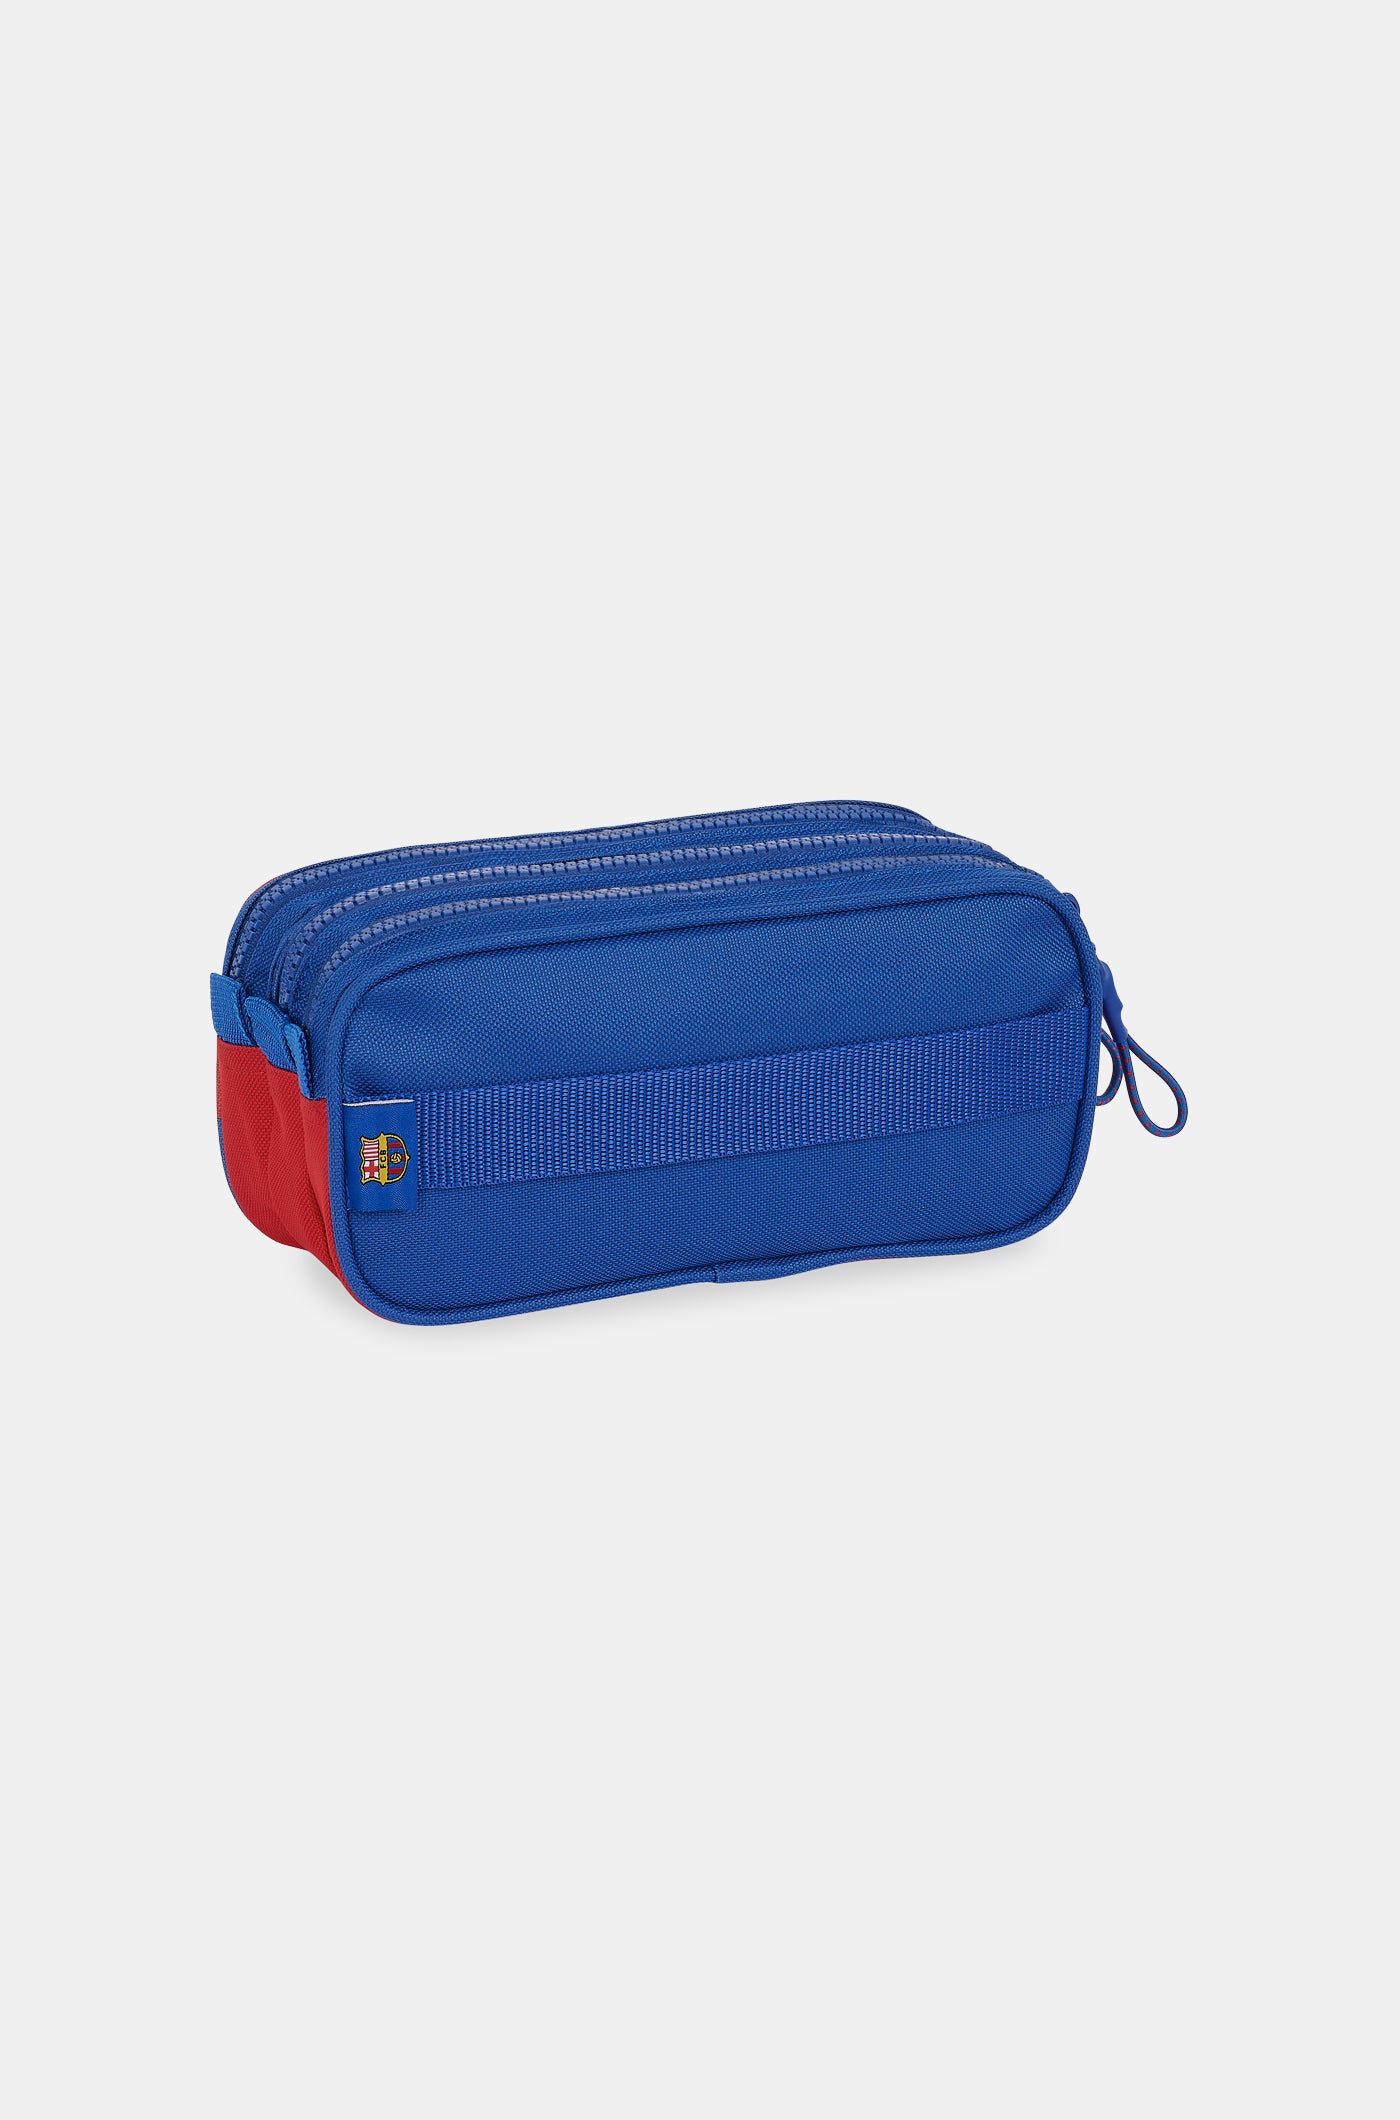 Away kit zipper case FC Barcelona 23/24